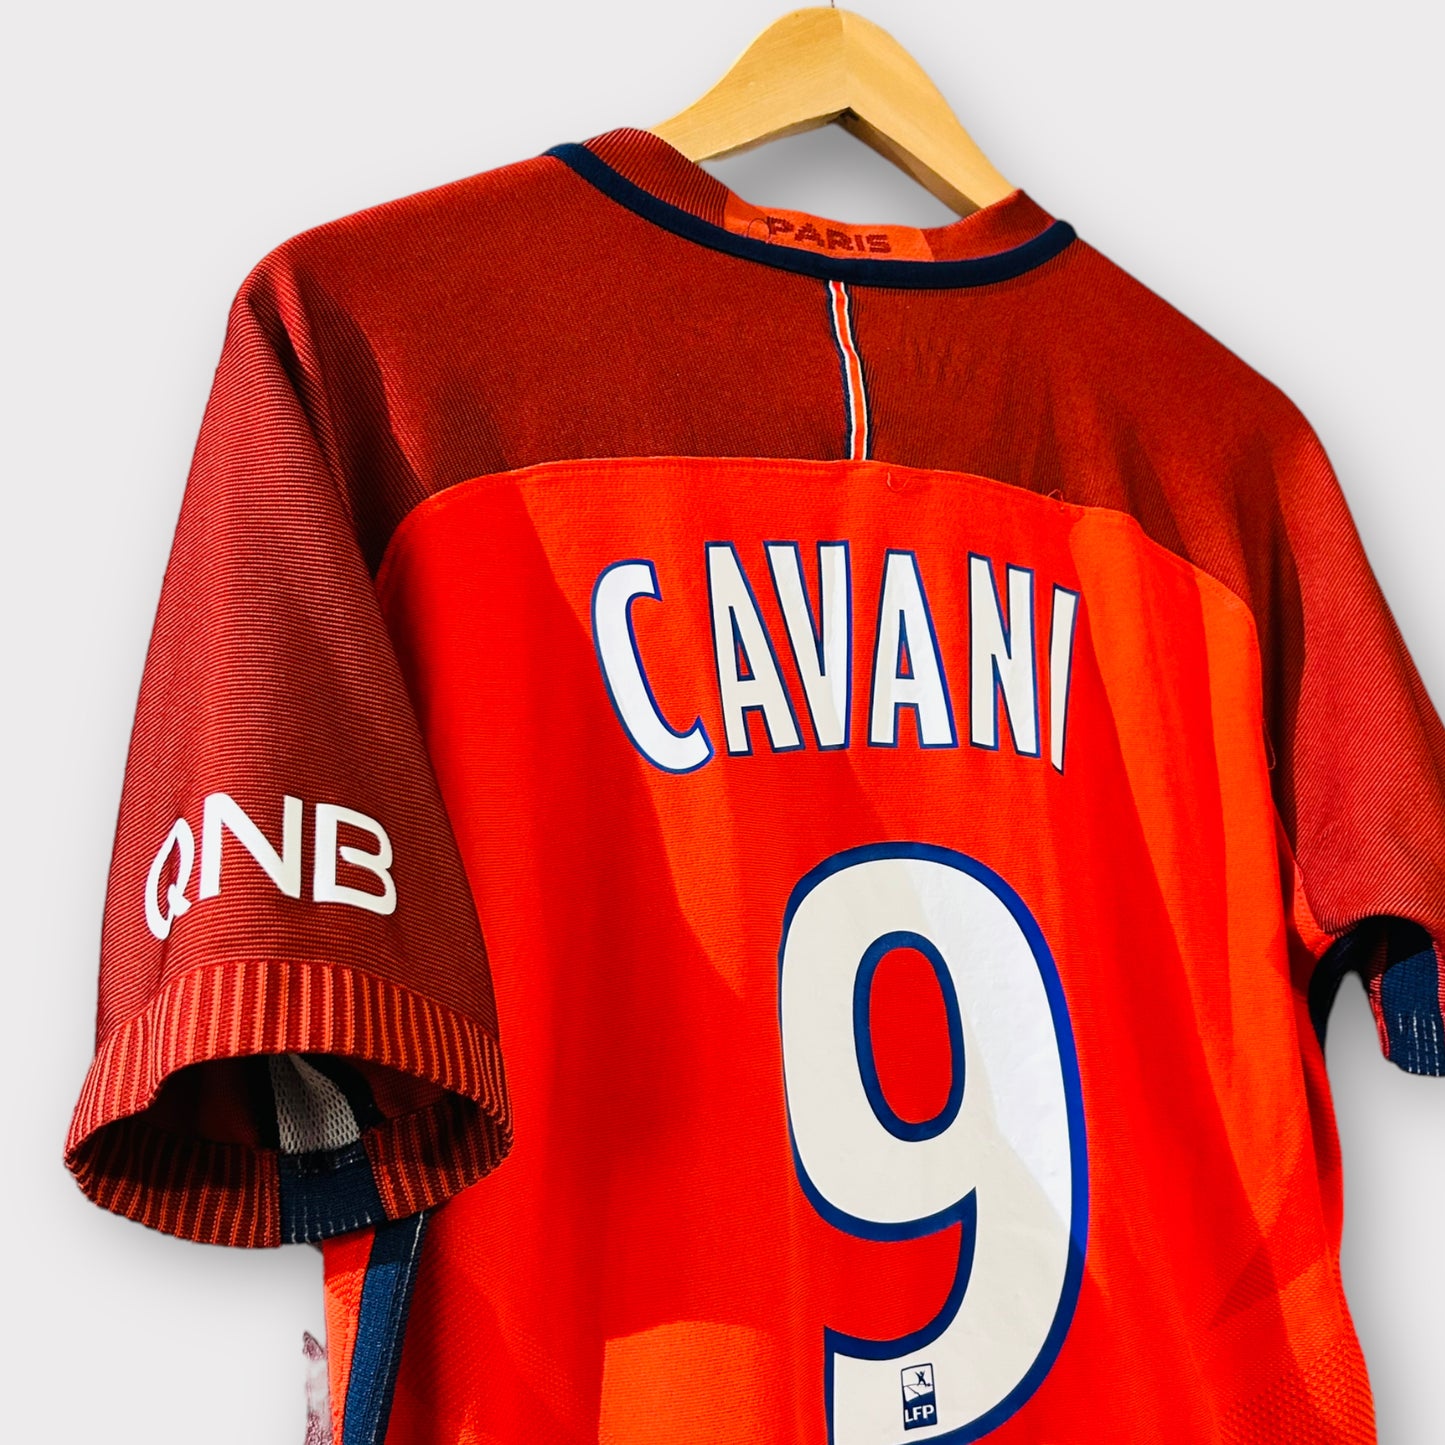 PSG 2016/17 Away Shirt - Cavani 9 (M)